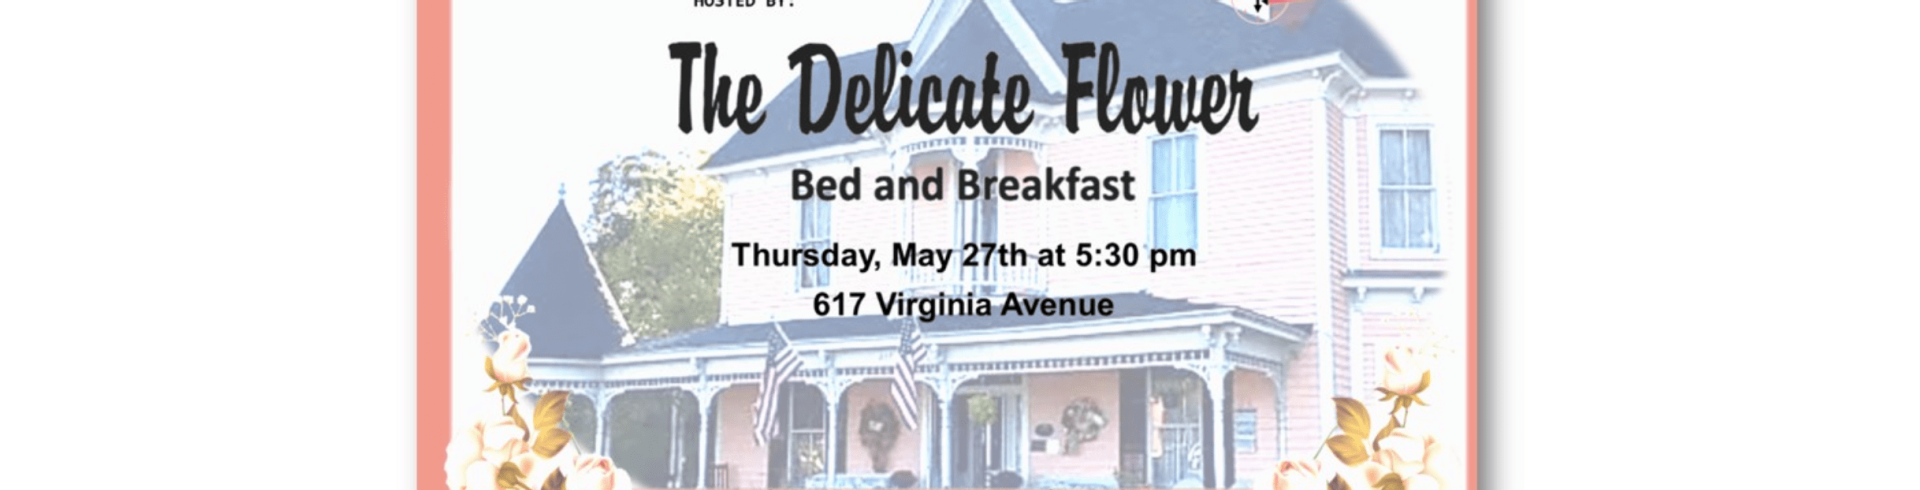 The Sunnyside Sisters Bed and Breakfast / Clarksville VA / Invite